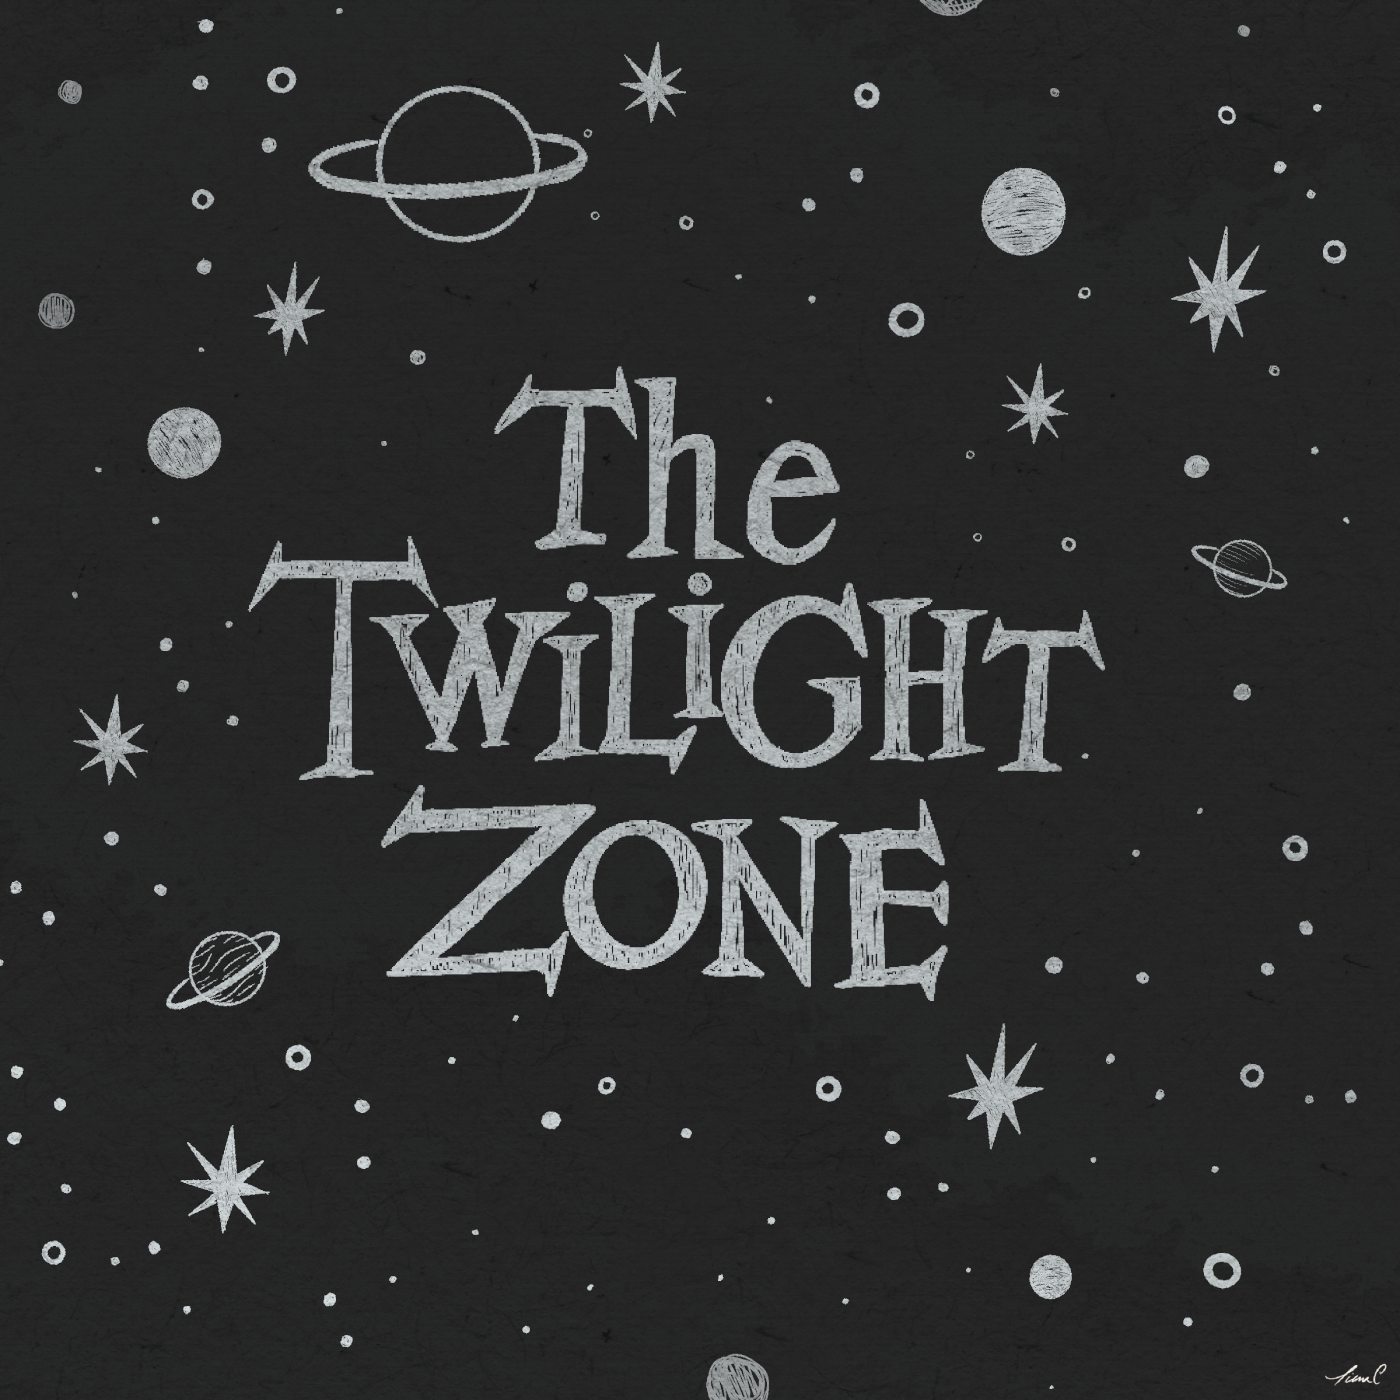 The Twilight Zone Gif on Behance